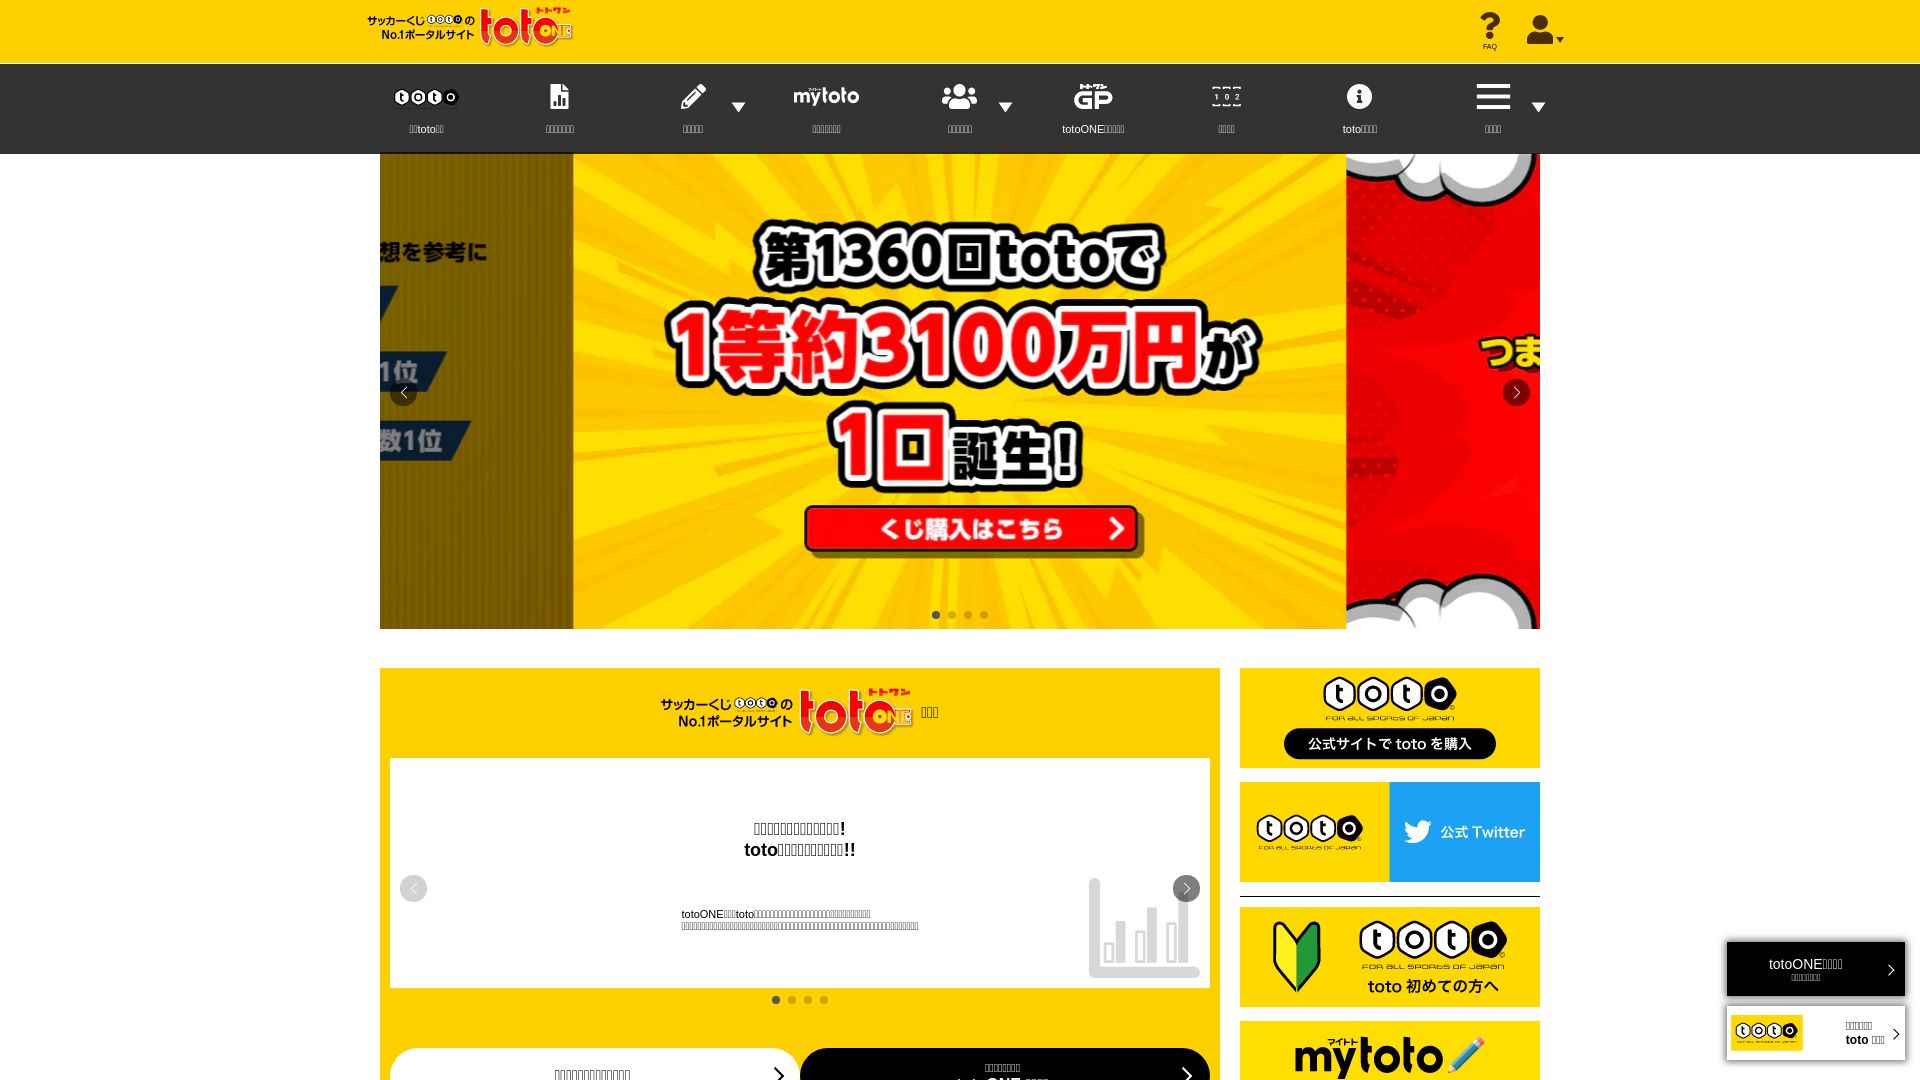 вебсайт totoone.jp Є   ONLINE